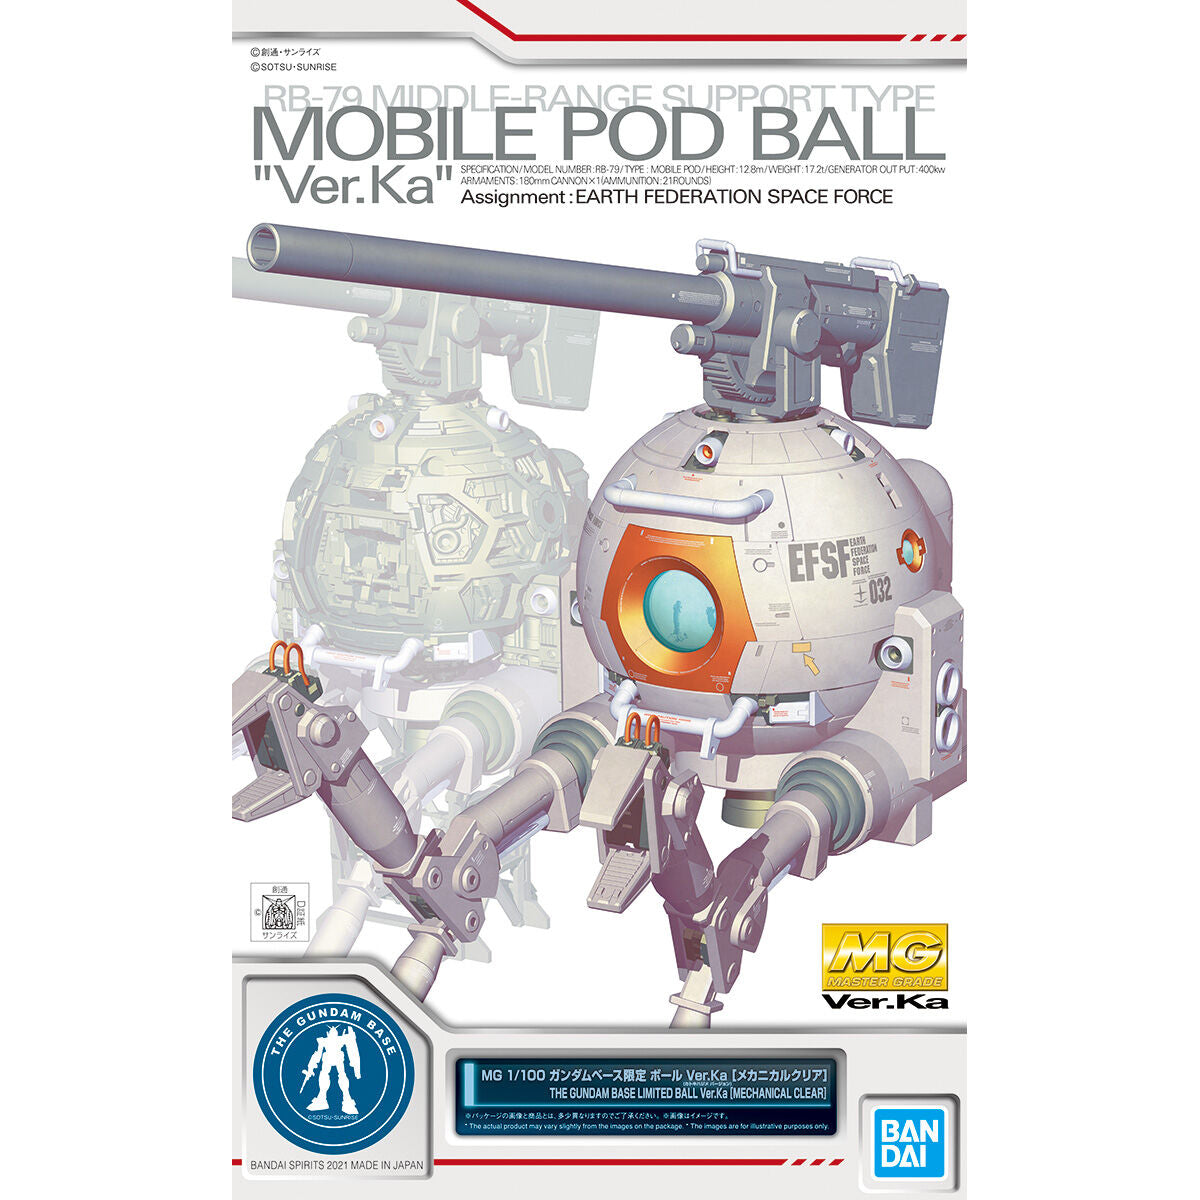 MG 1/100 Gundam Base Limited Mobile Ball Ver.Ka [Mechanical Clear]